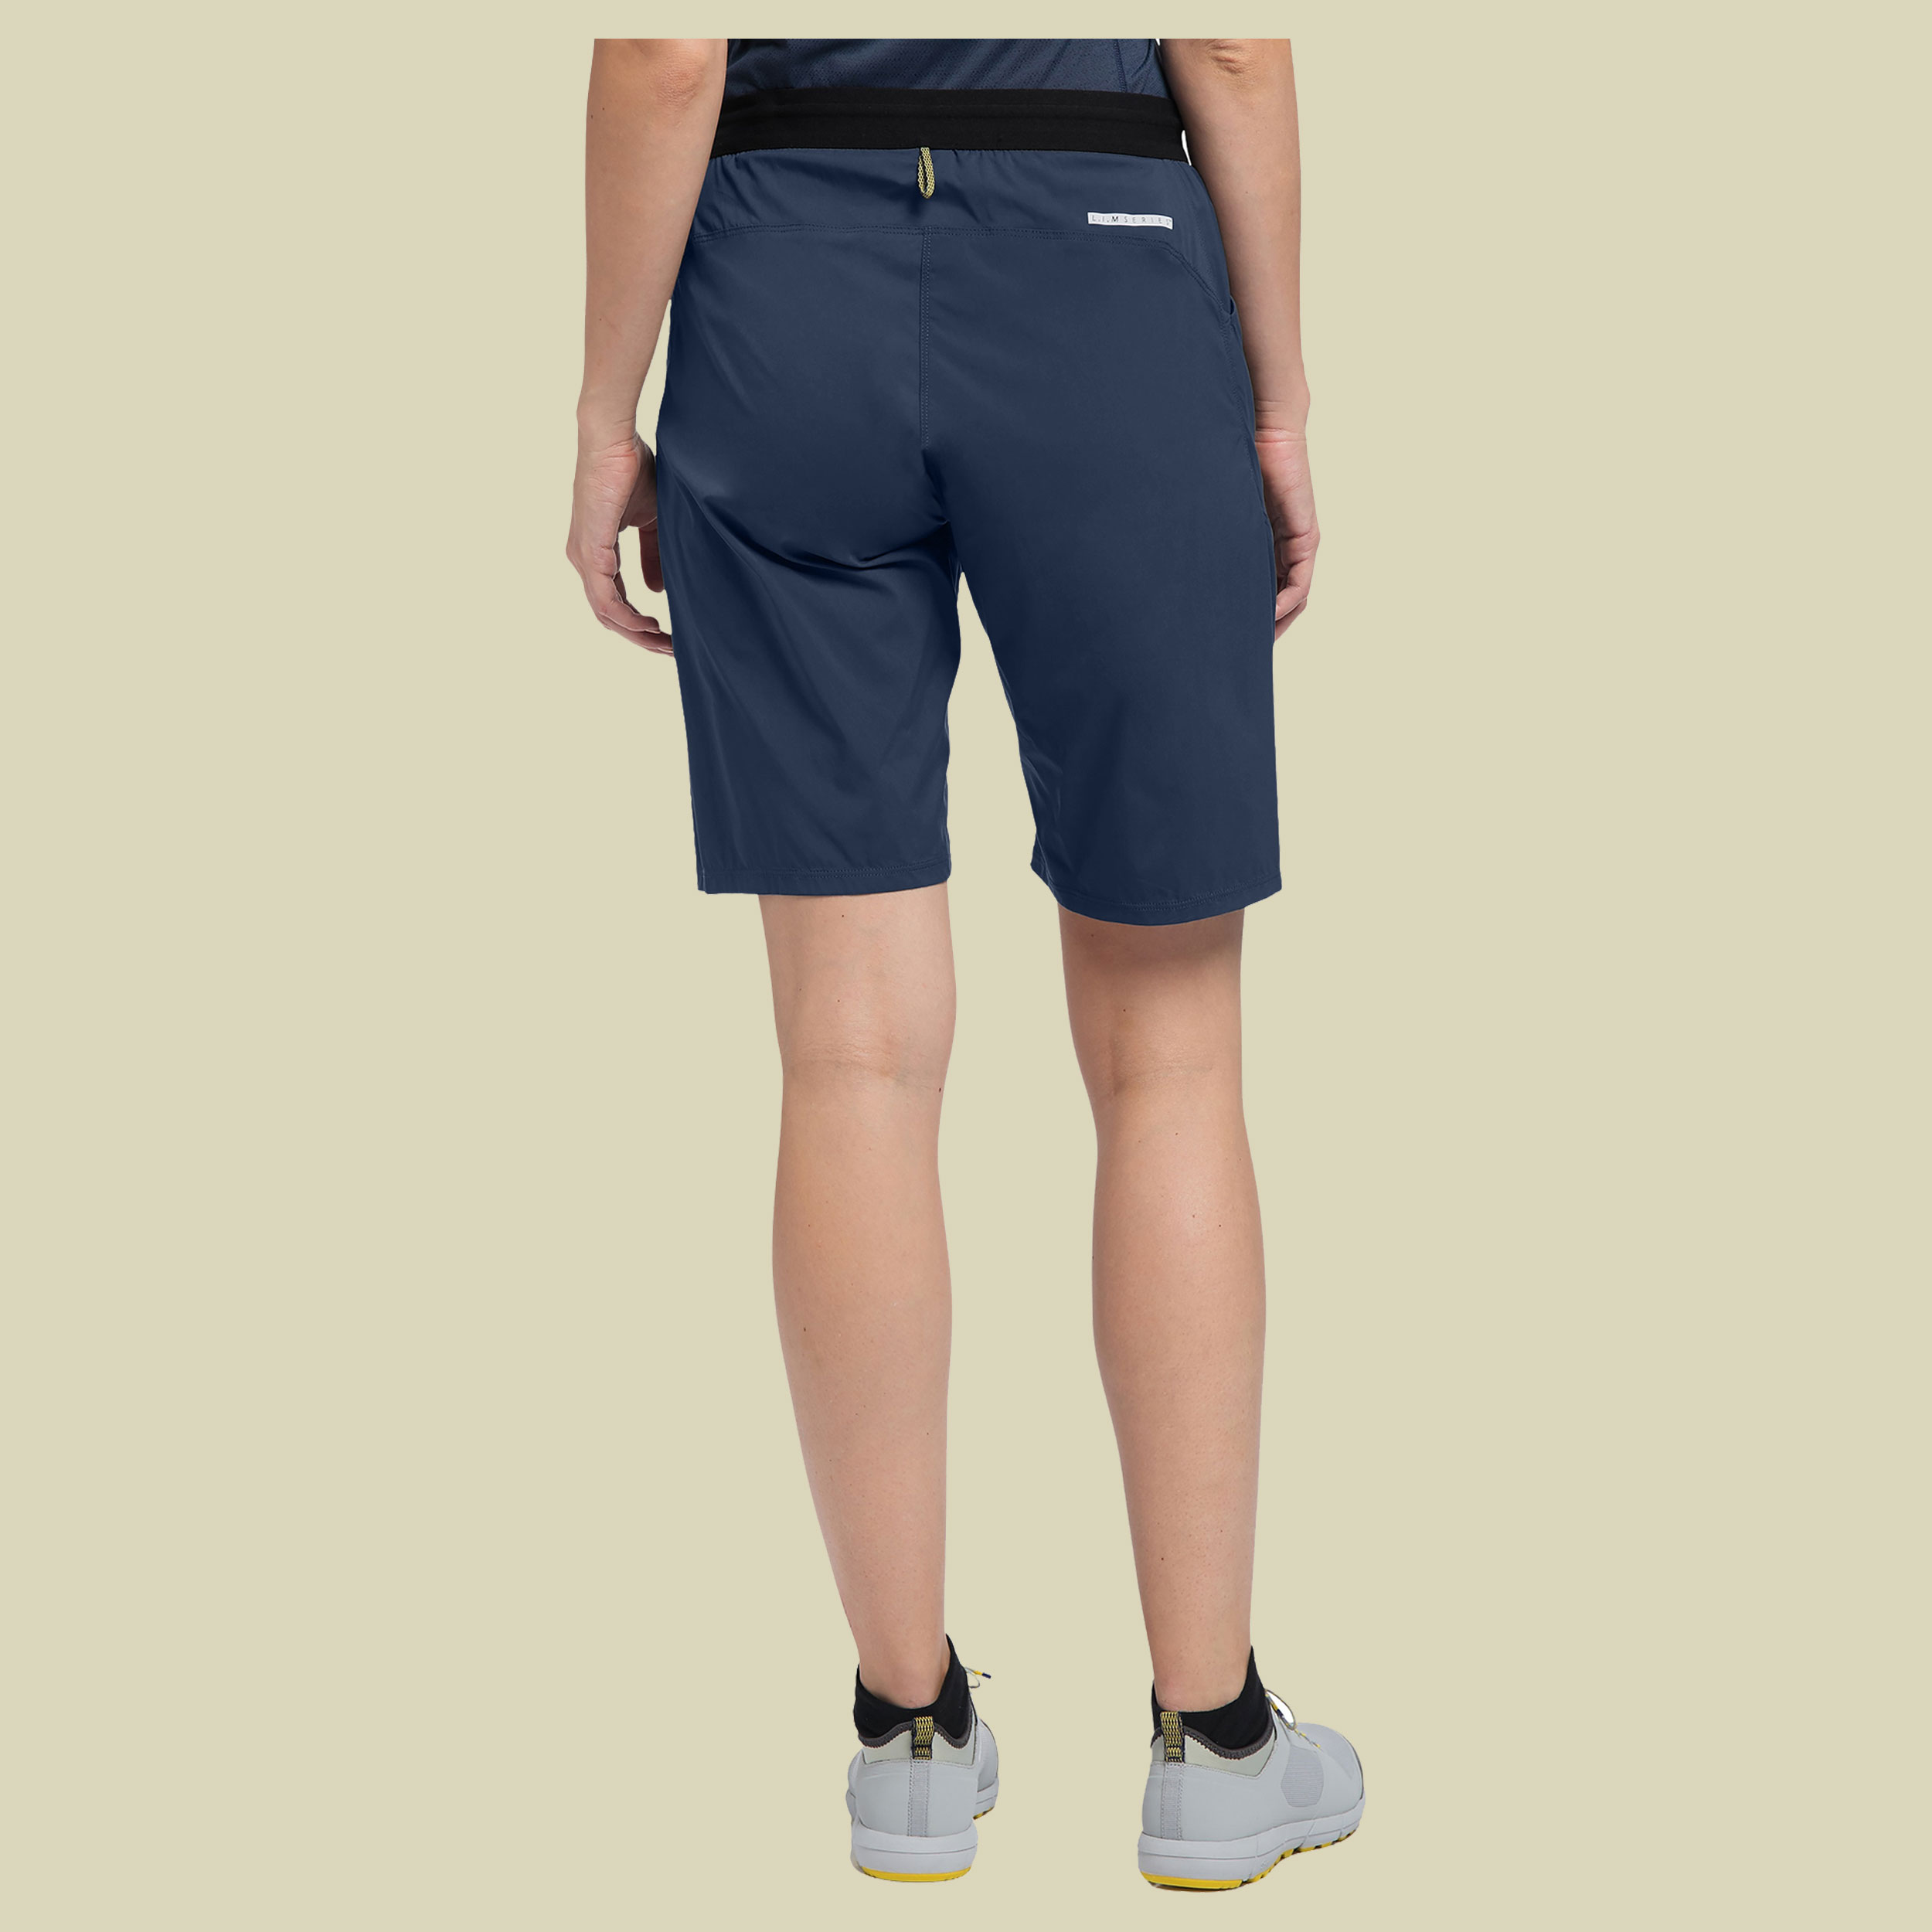 L.I.M Fuse Shorts Women Größe 38 Farbe tarn blue